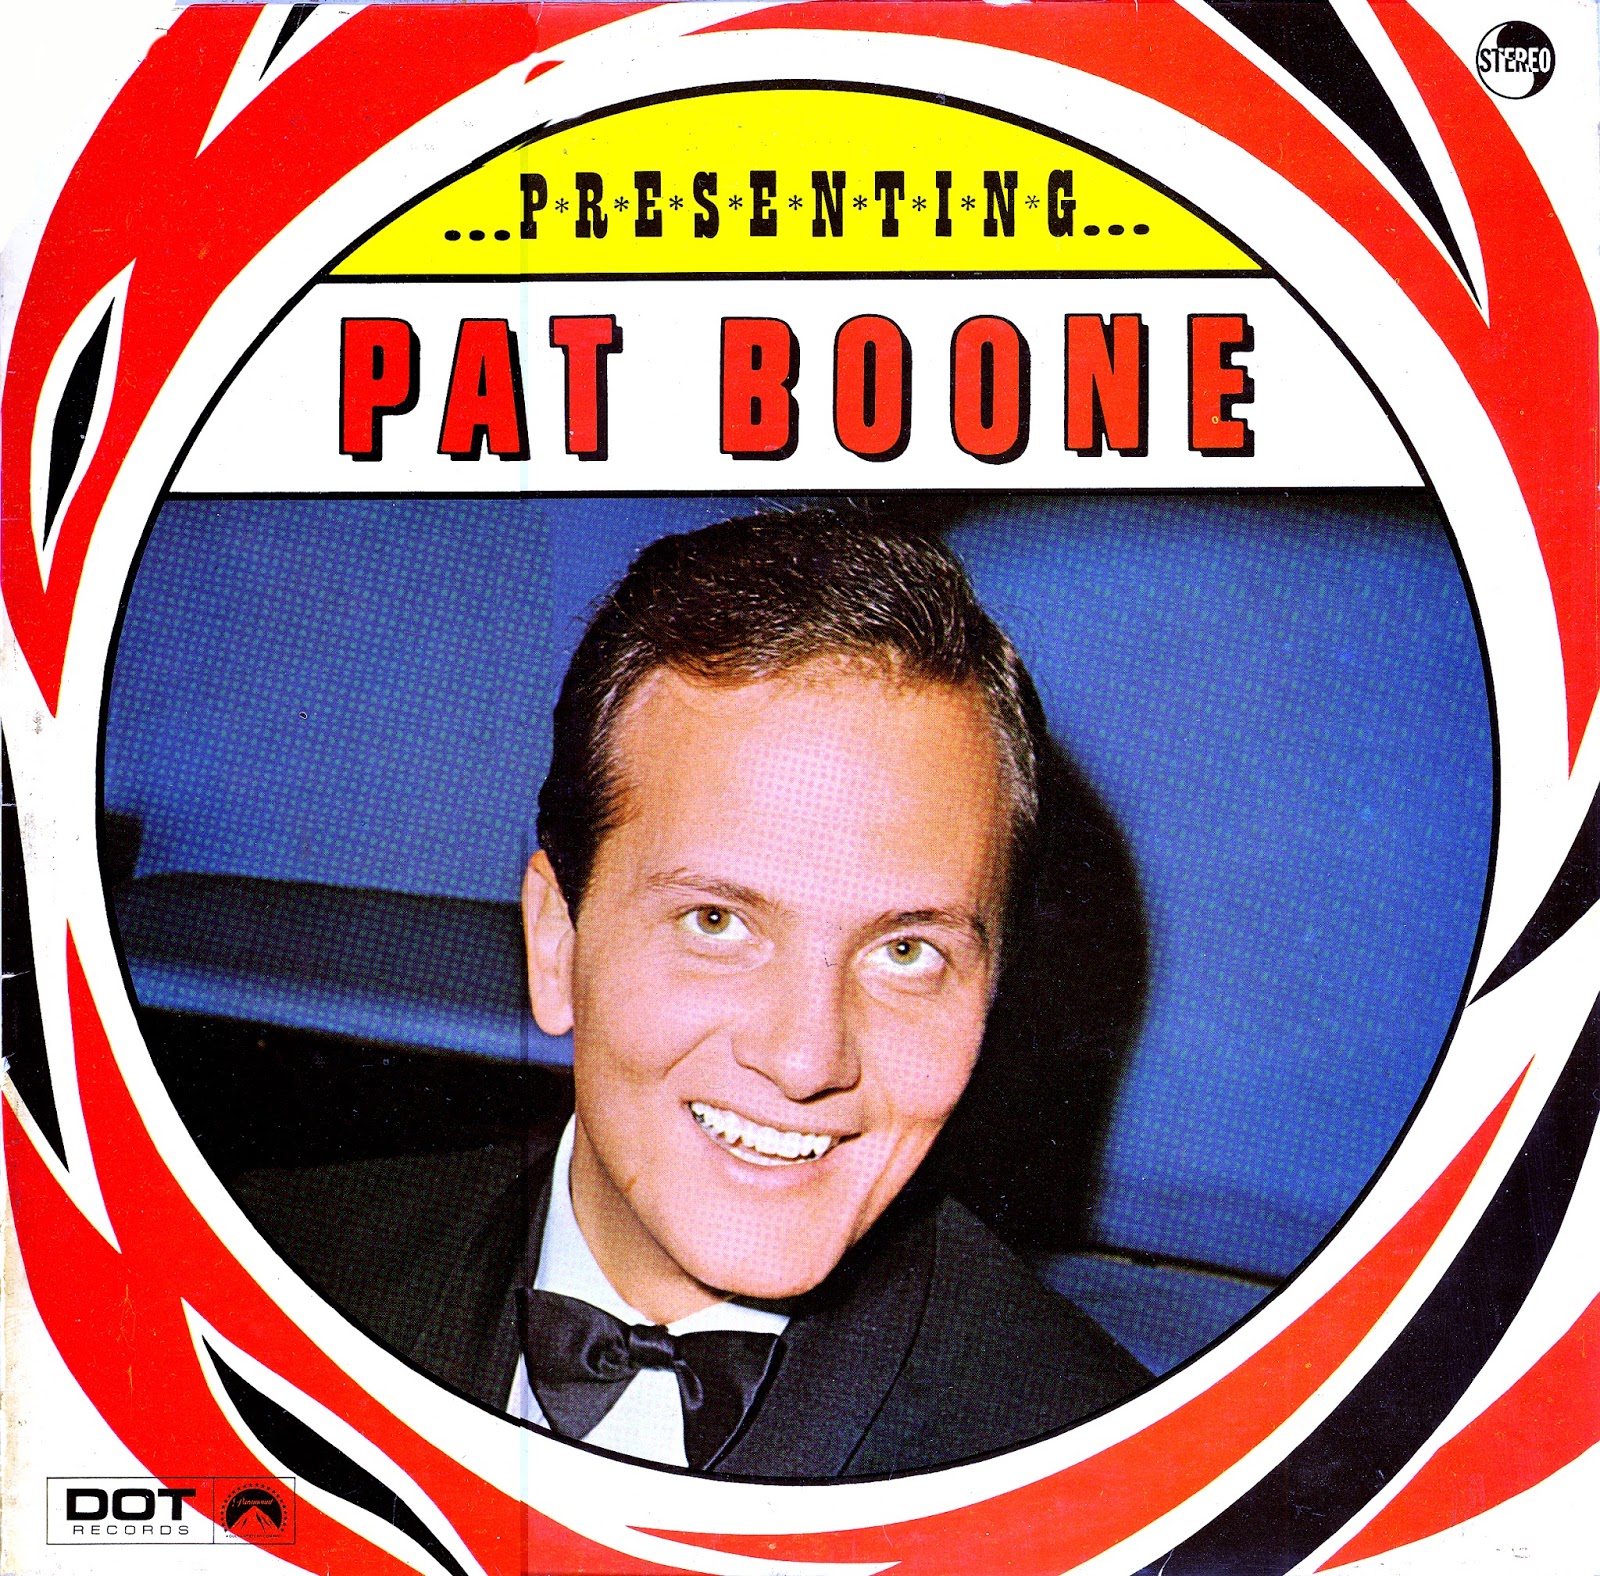 Pat Boone smile.